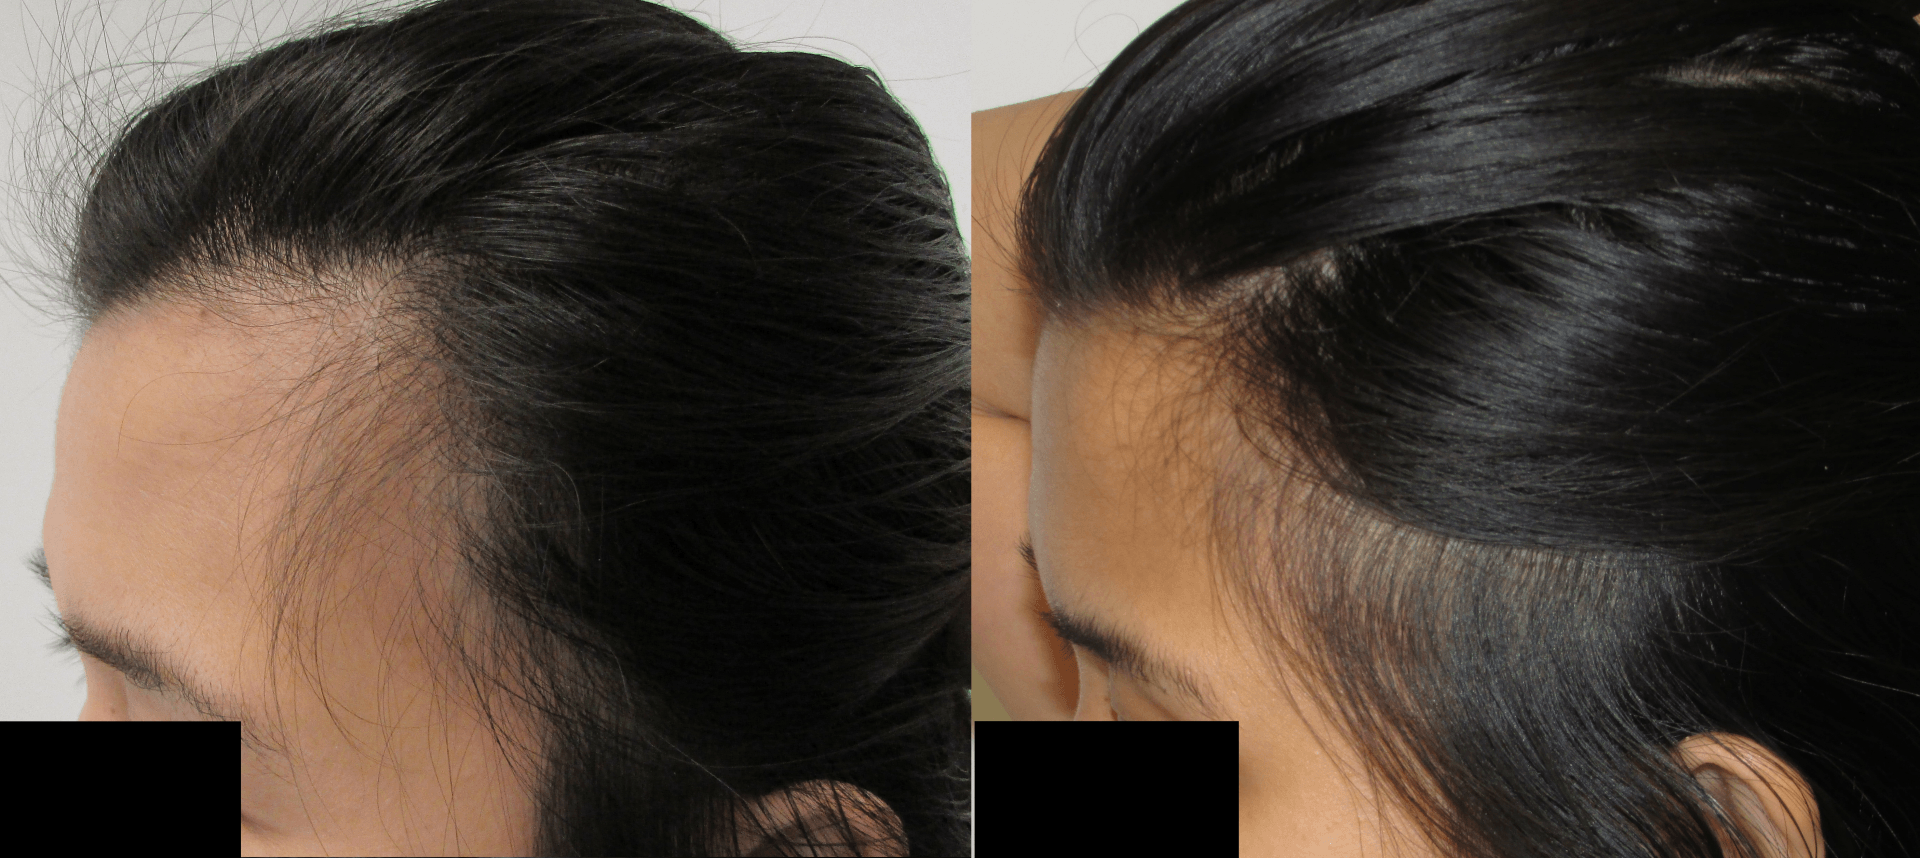 Female temples hair regrowth 9 months side - Karan